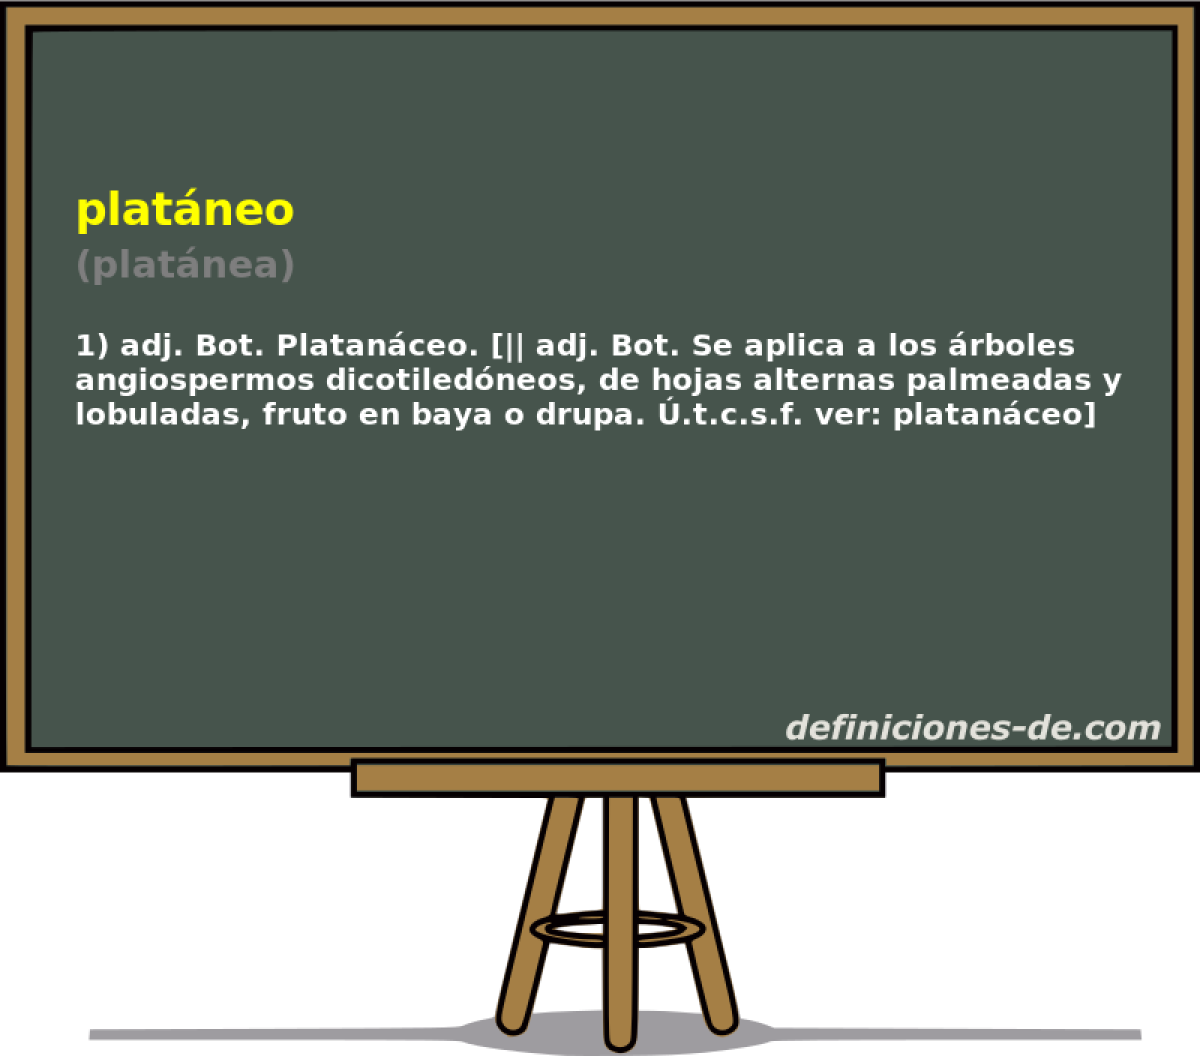 platneo (platnea)